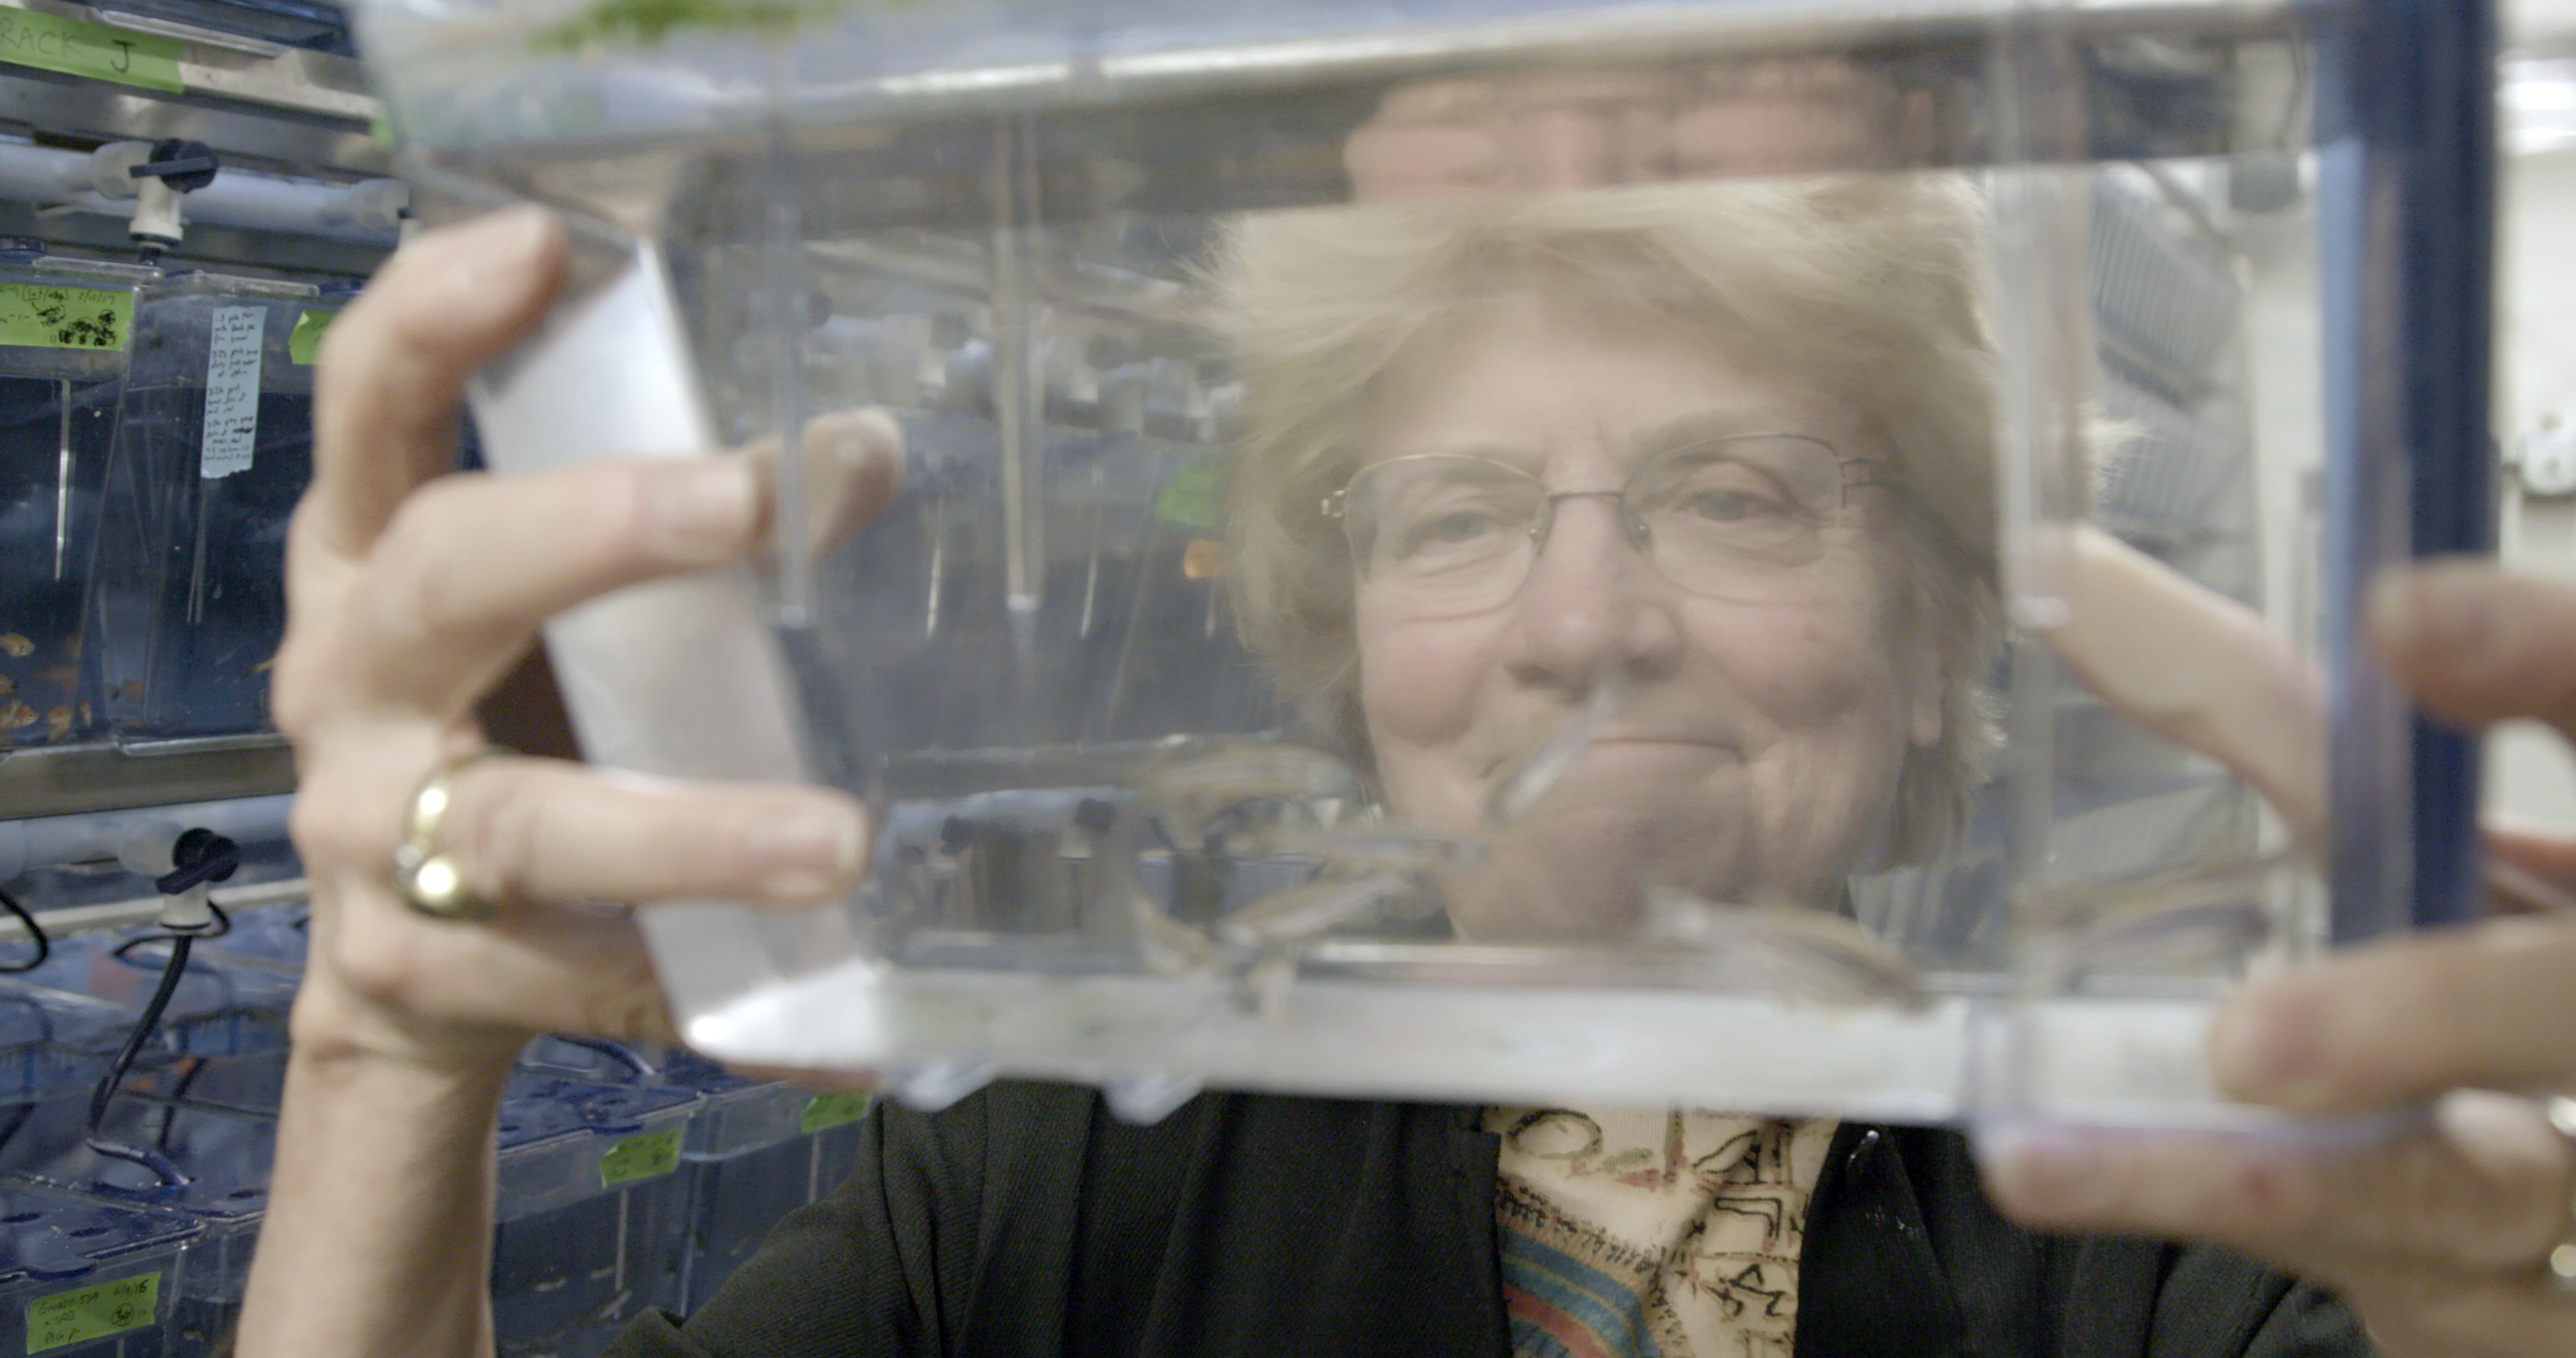 MIT biologist Nancy Hopkins looking into a water tank